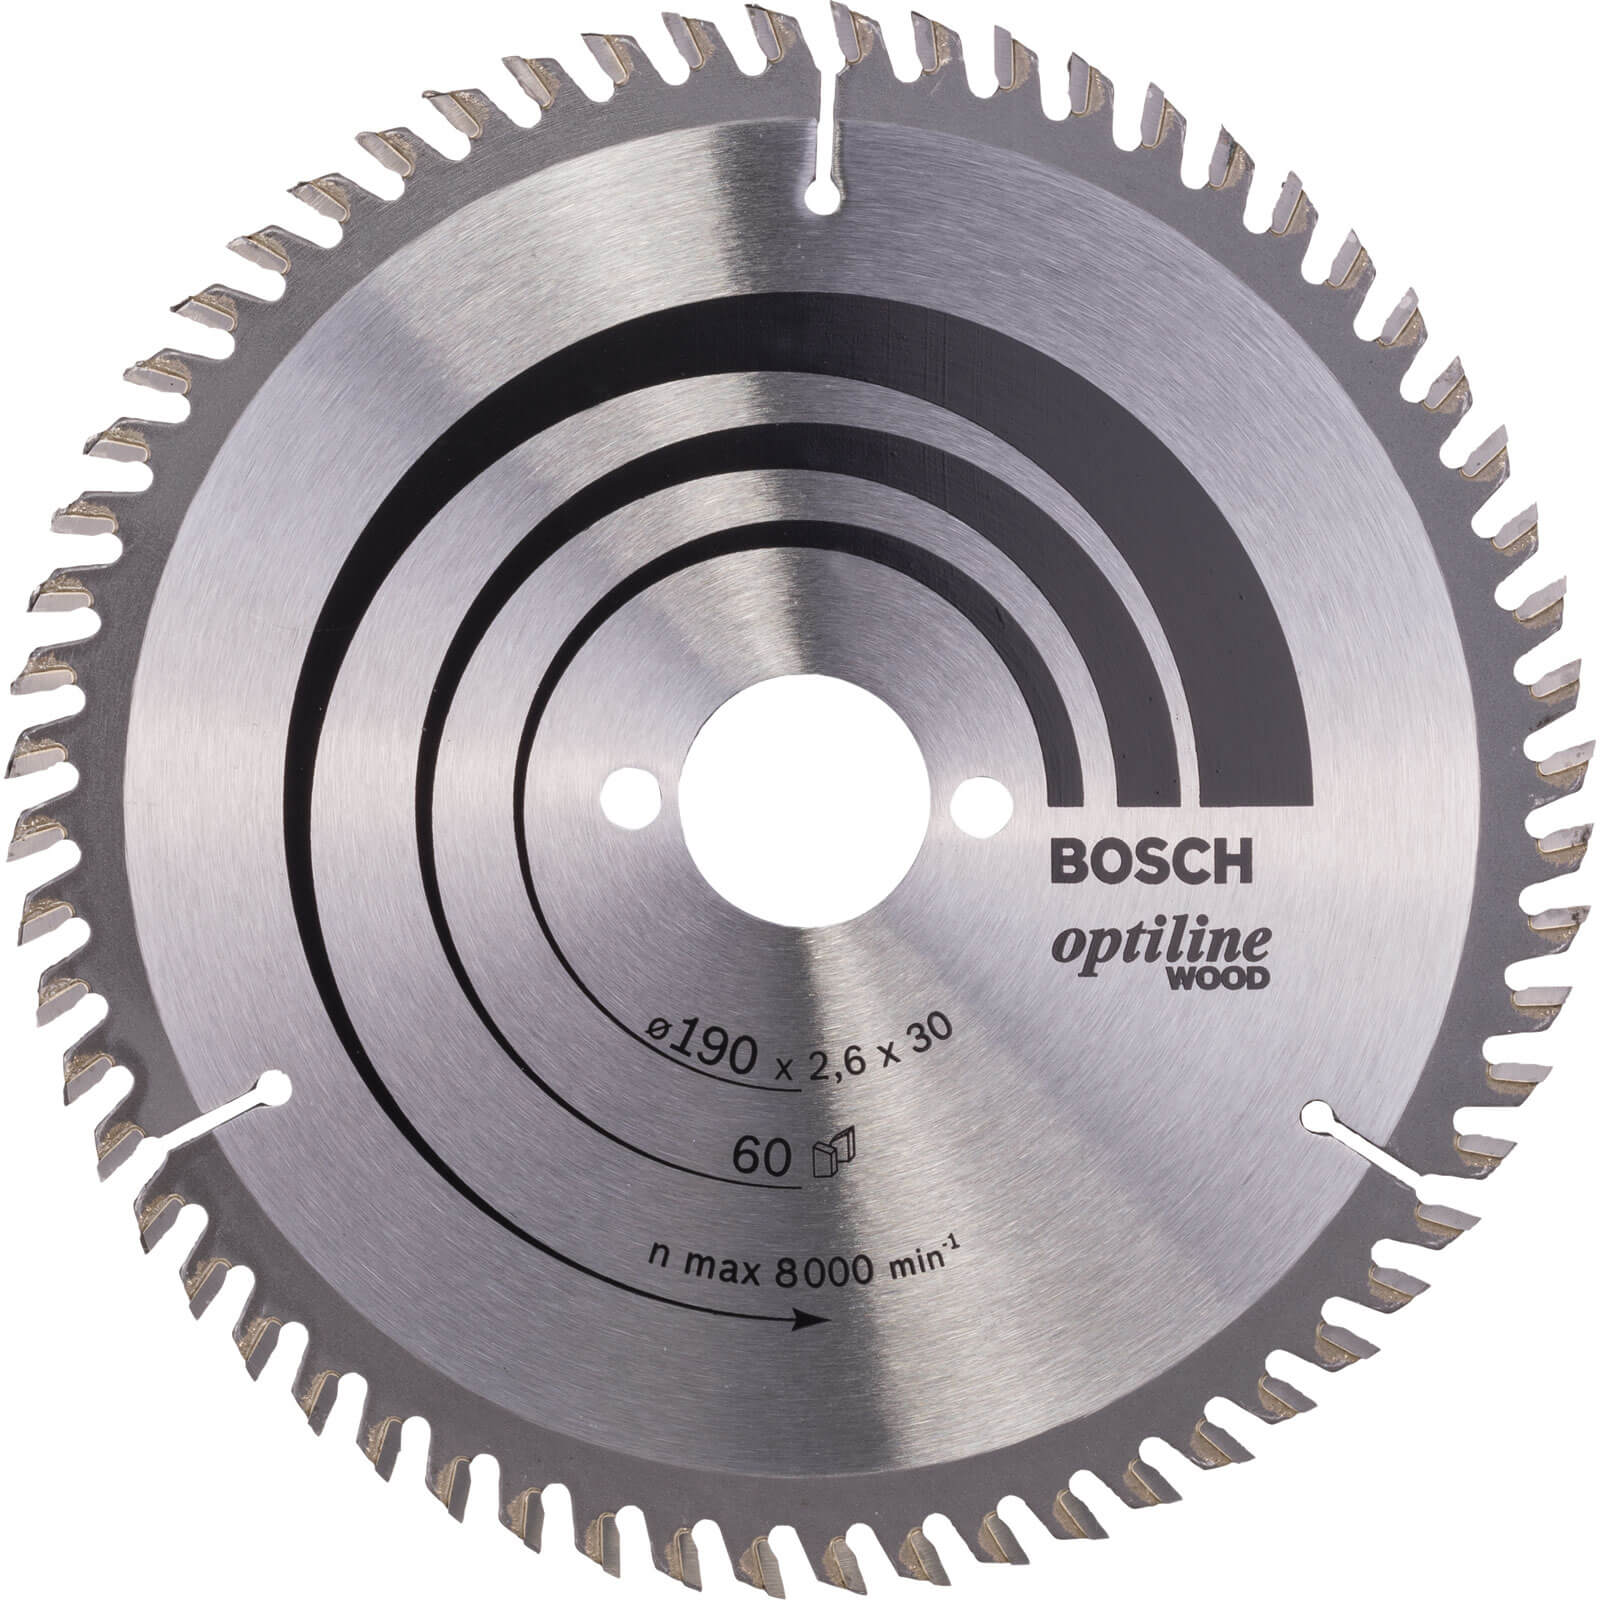 Photos - Power Tool Accessory Bosch Optiline Wood Cutting Saw Blade 190mm 60T 30mm 